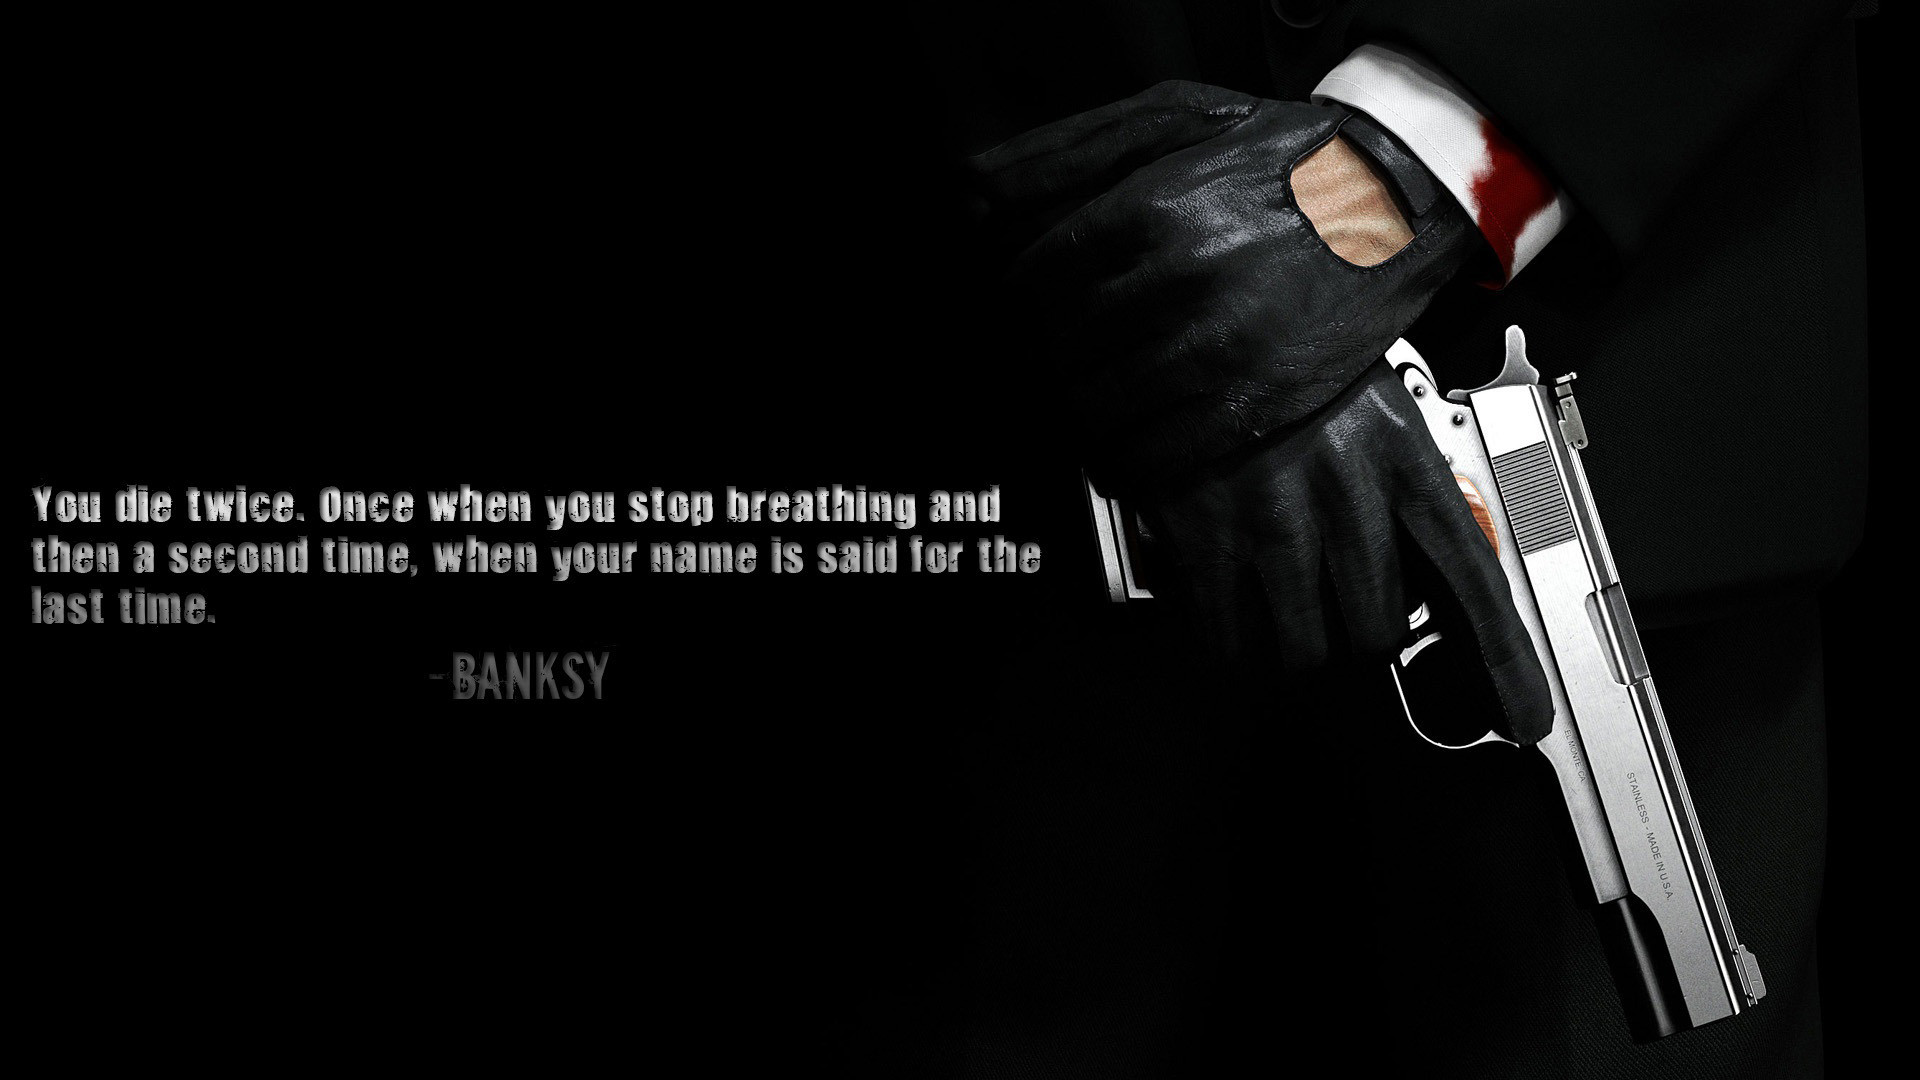 Banksy quote HD Wallpaper 1920×1080